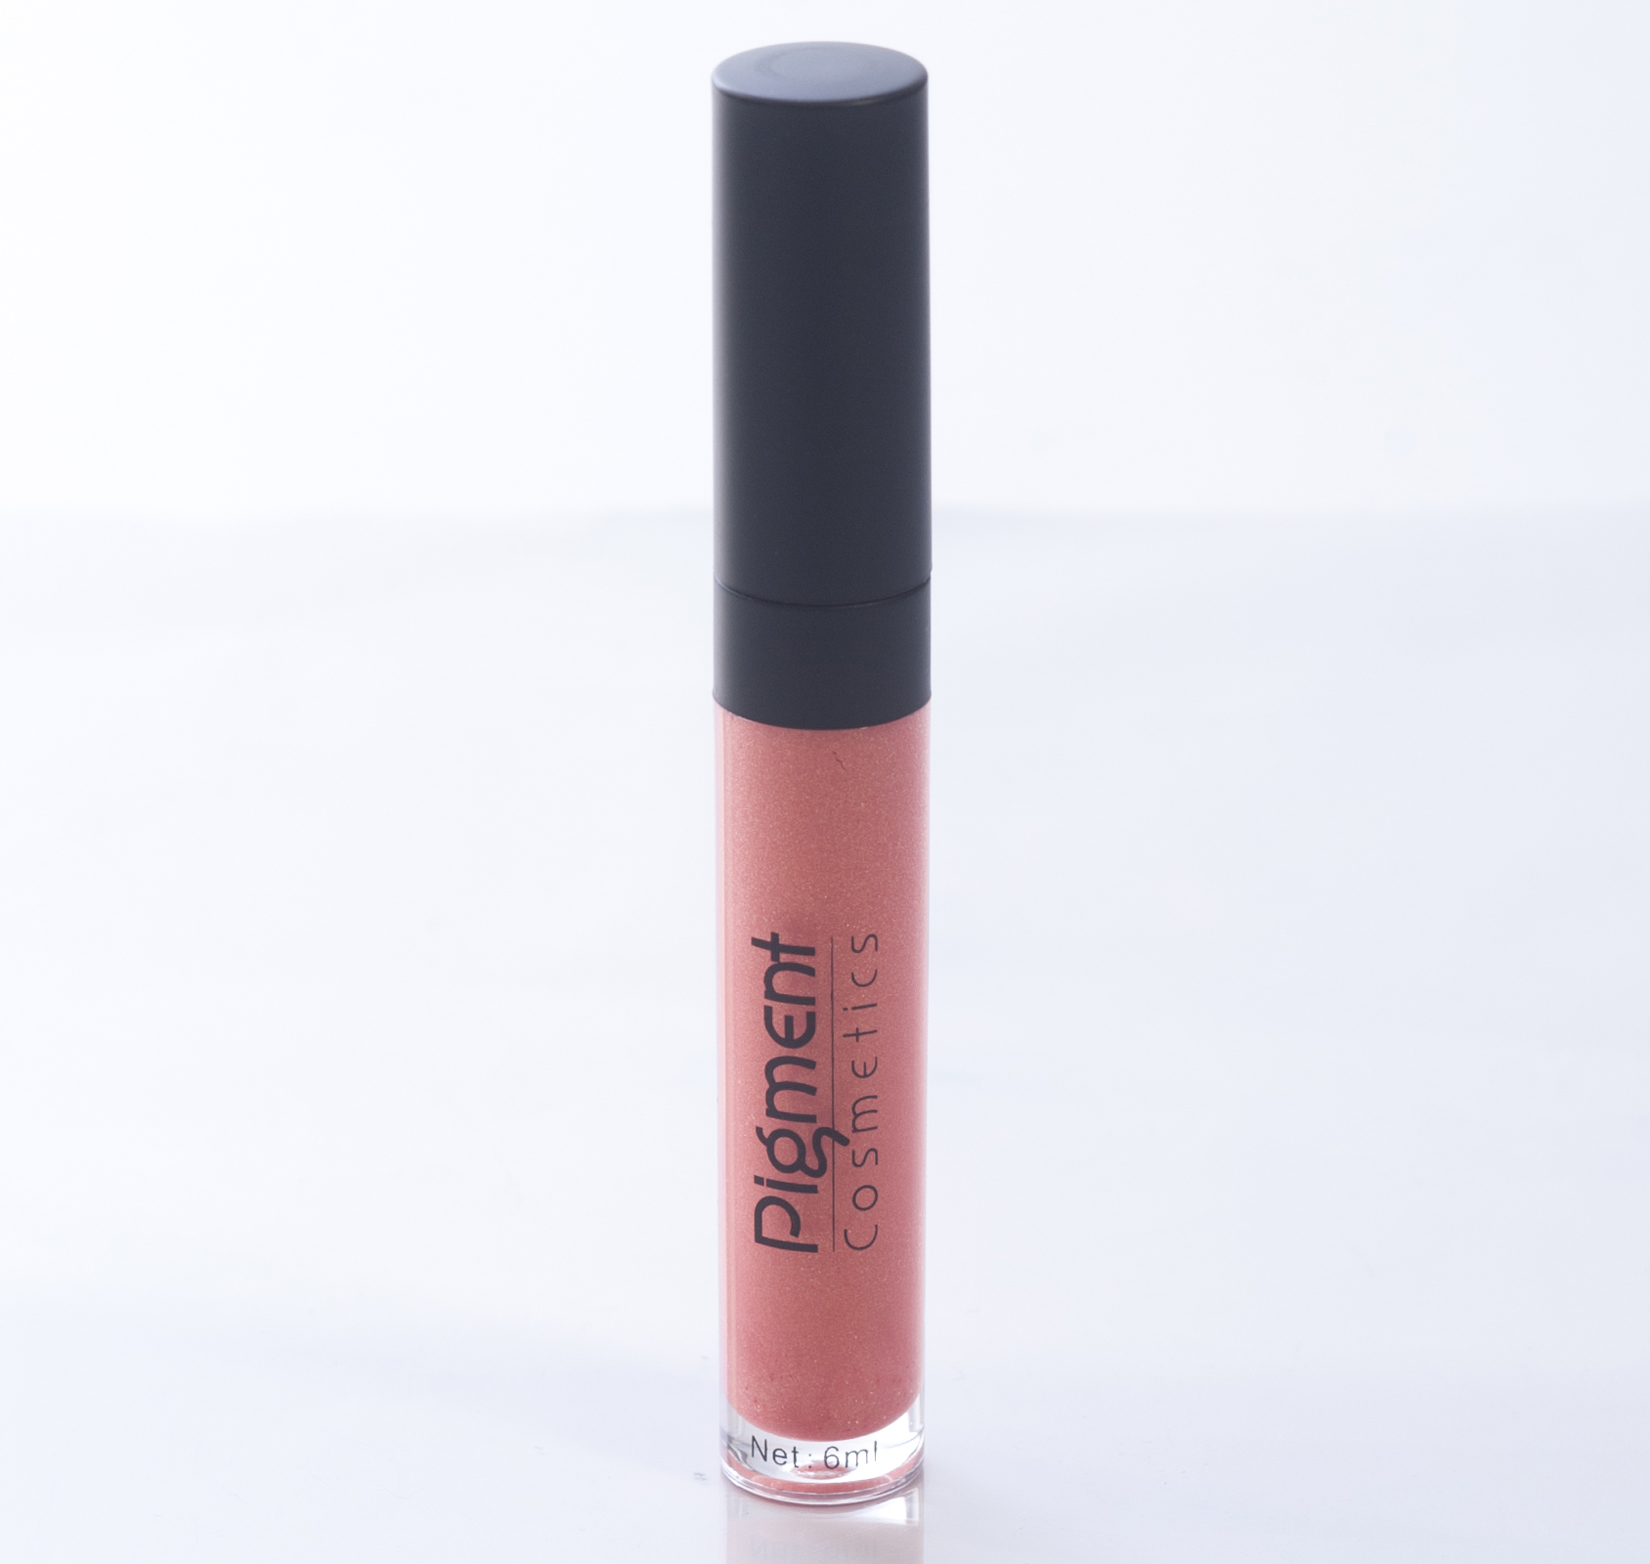 Shop Pigment Powder For Lip Gloss online